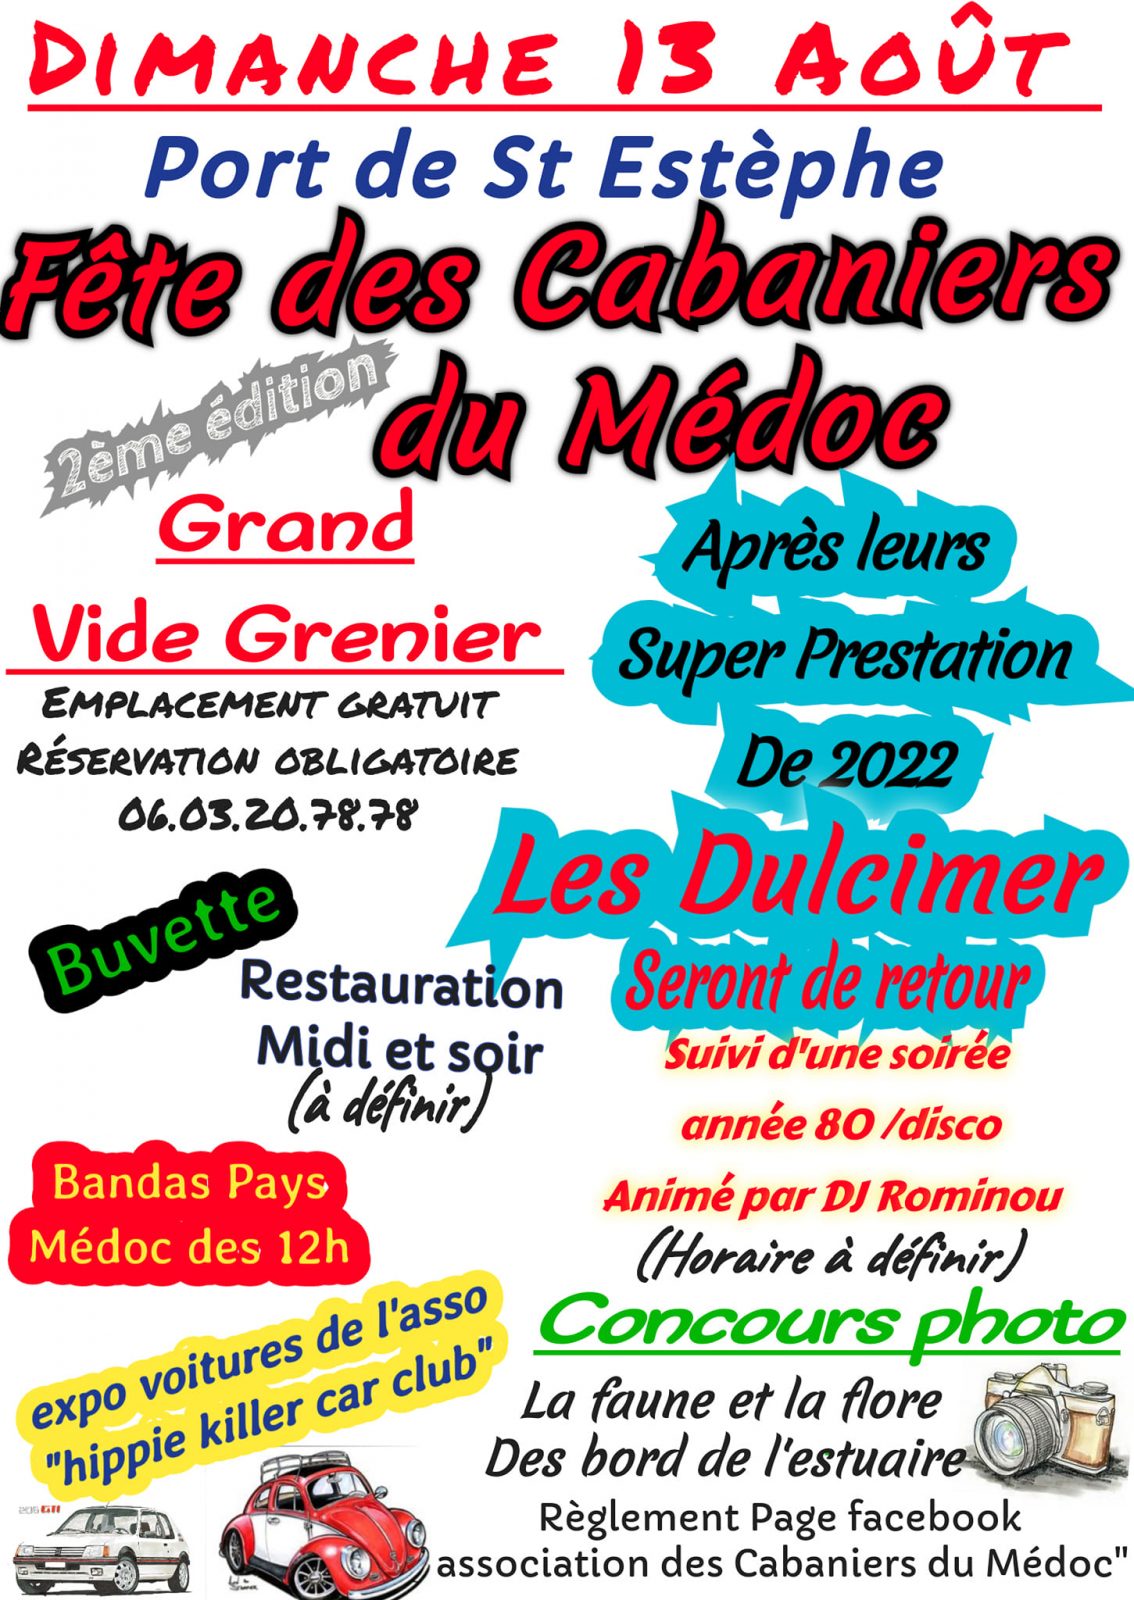 13-08-23_fête_cabaniers_St_Estephe